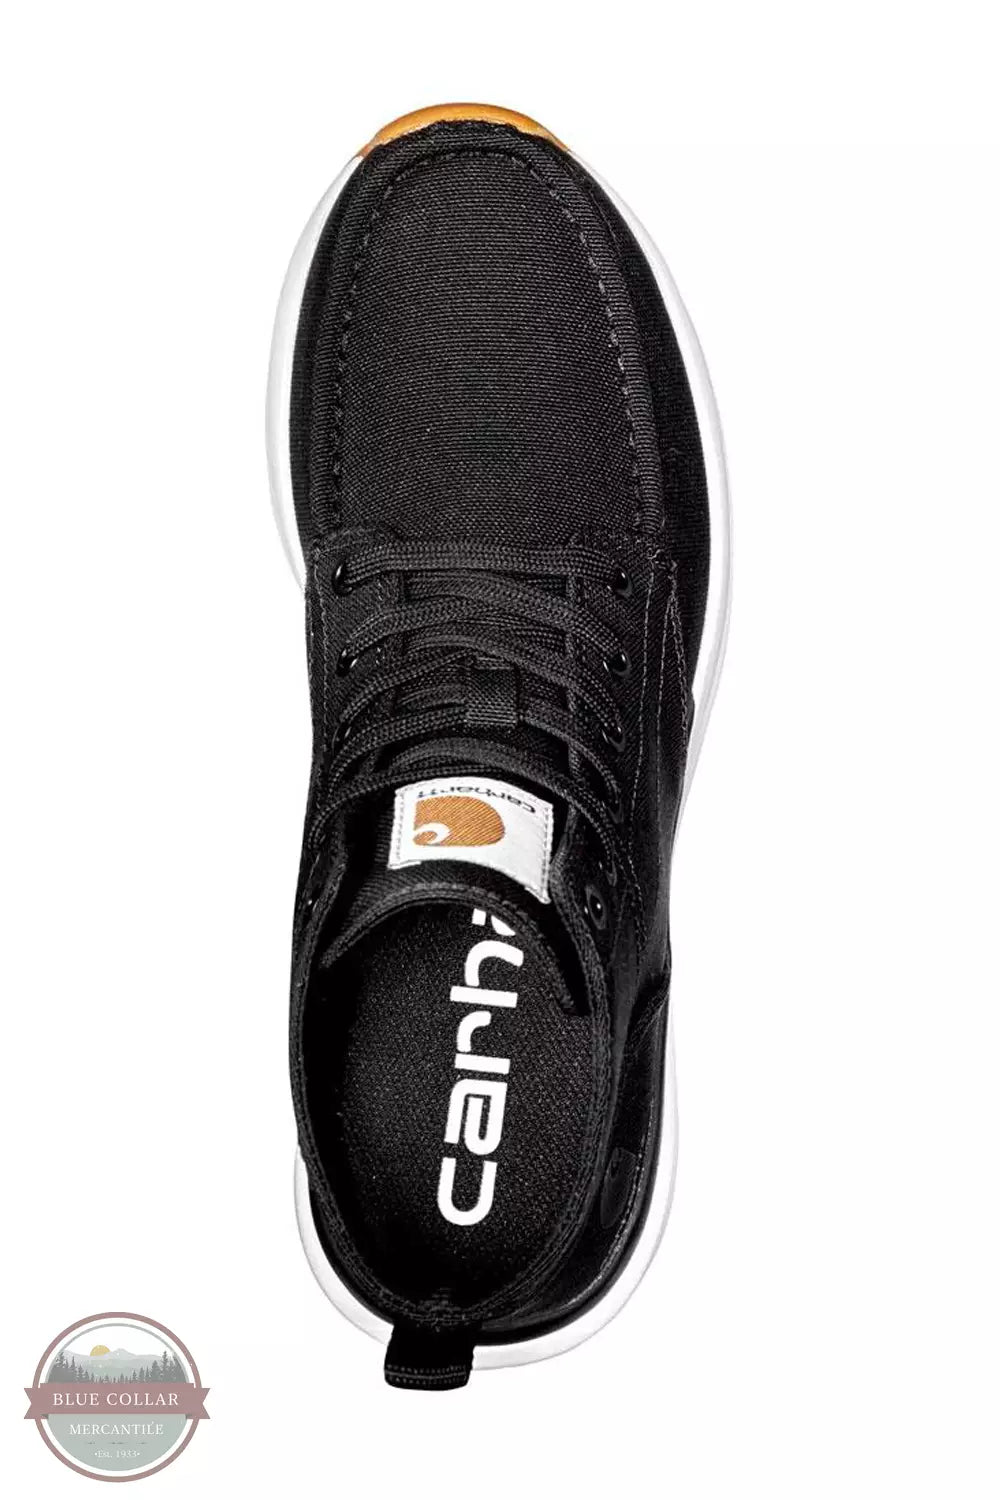 Carhartt Footwear FS4071-W Haslett Moc Toe Canvas Chukka Shoes Toe View